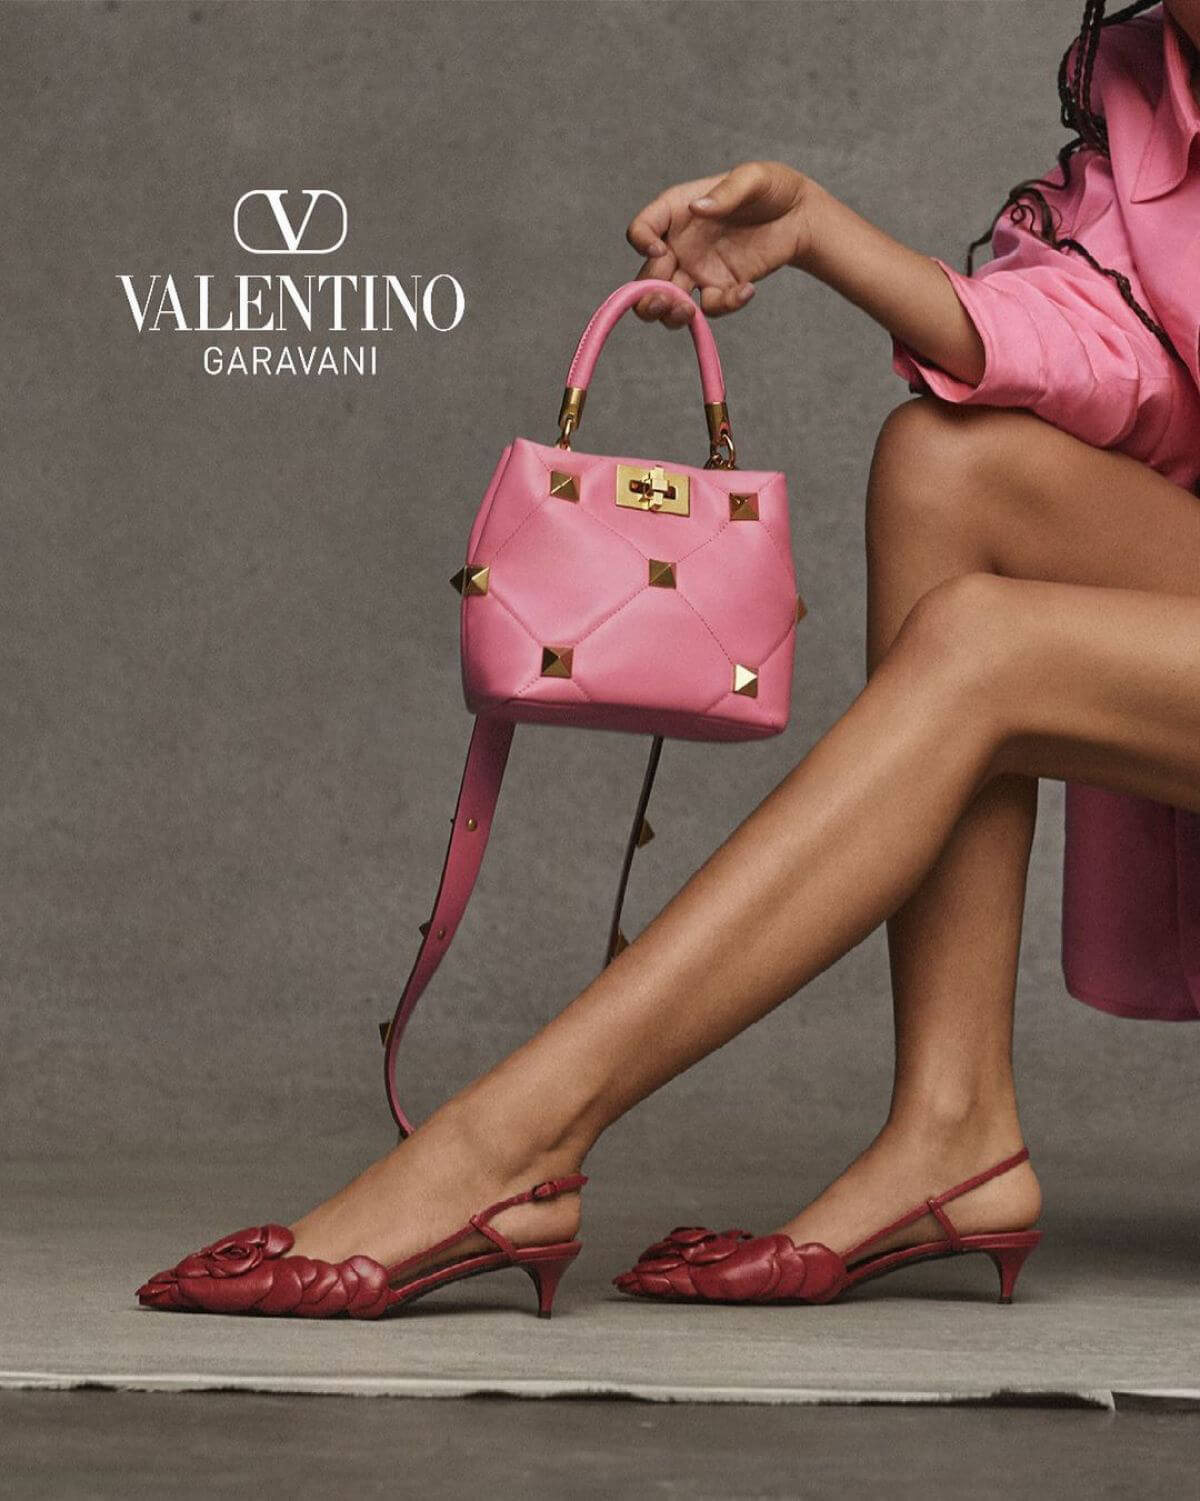 Zendaya Photoshoot for Valentino 2020/2021 Campaign 3